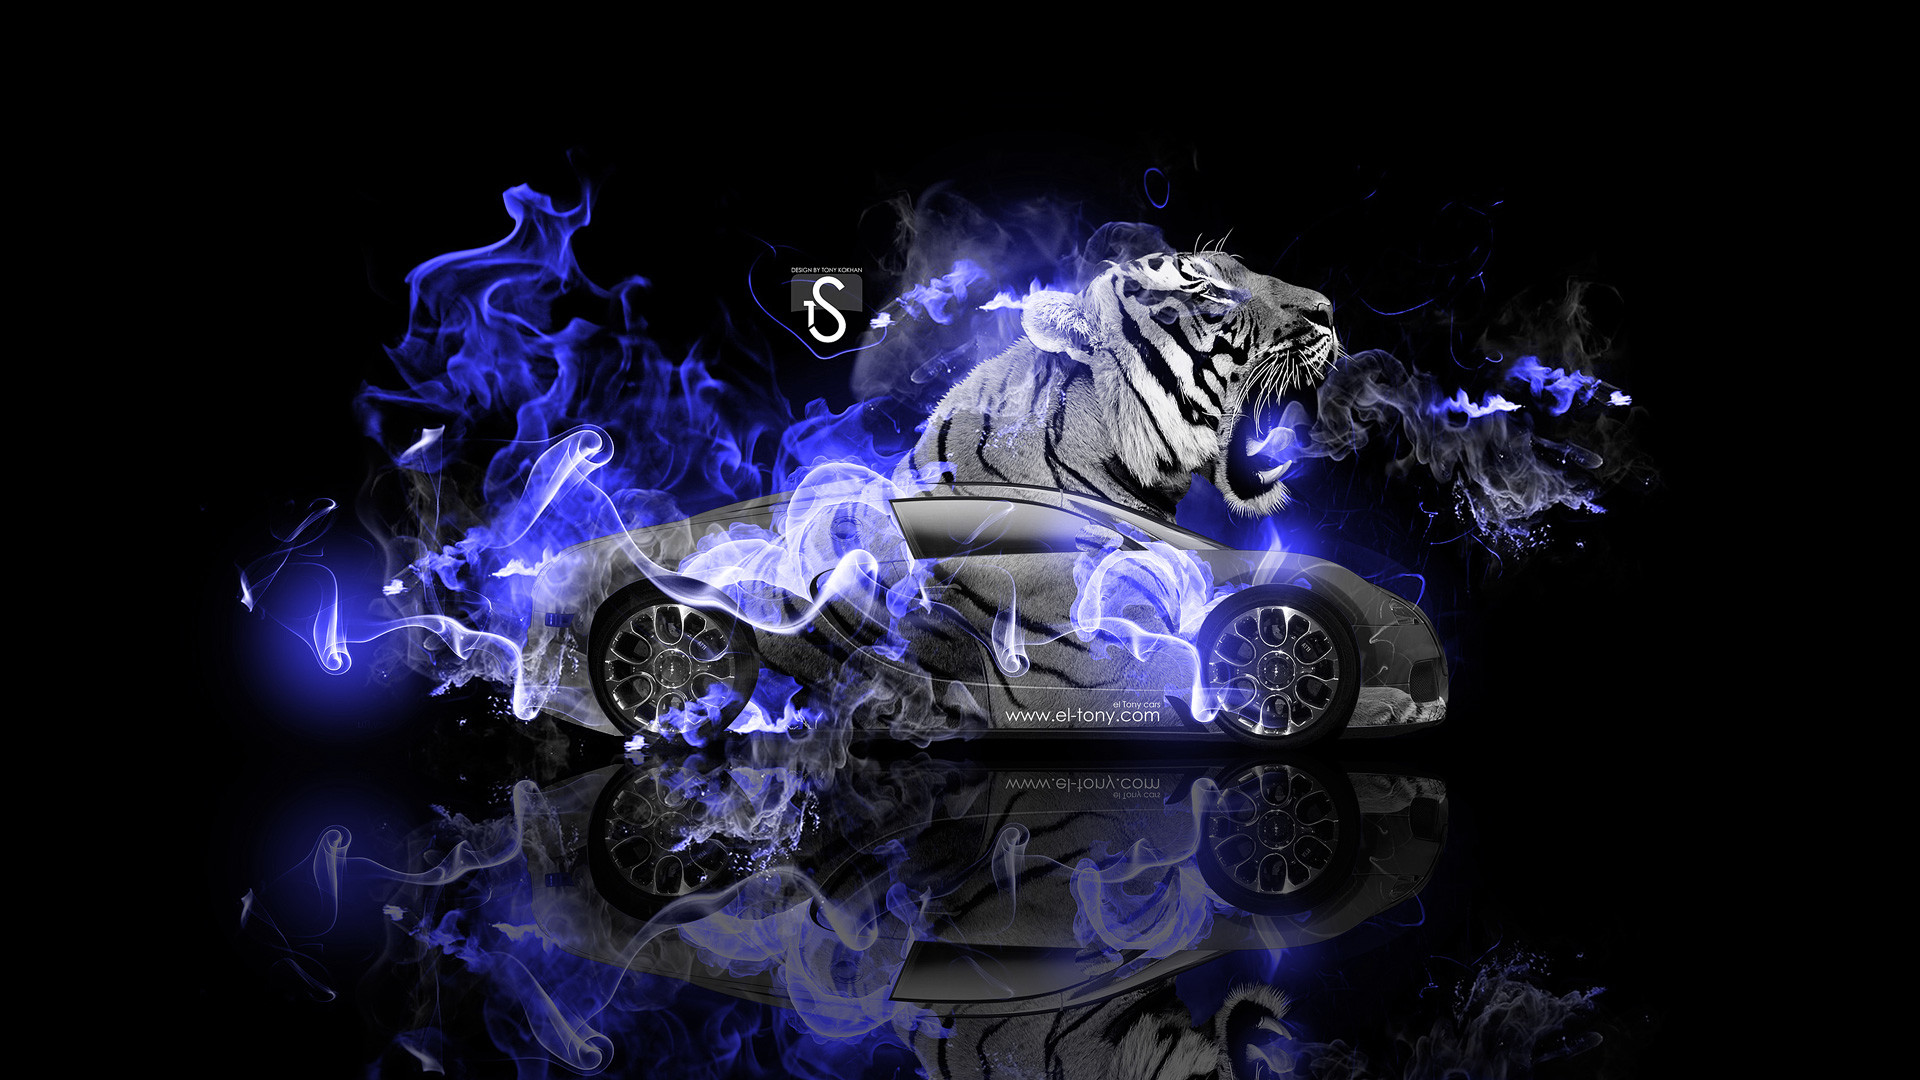 Bugatti Veyron Fantasy Tiger Blue Fire Car 2014 - Cool Wallpaper Bugatti - HD Wallpaper 